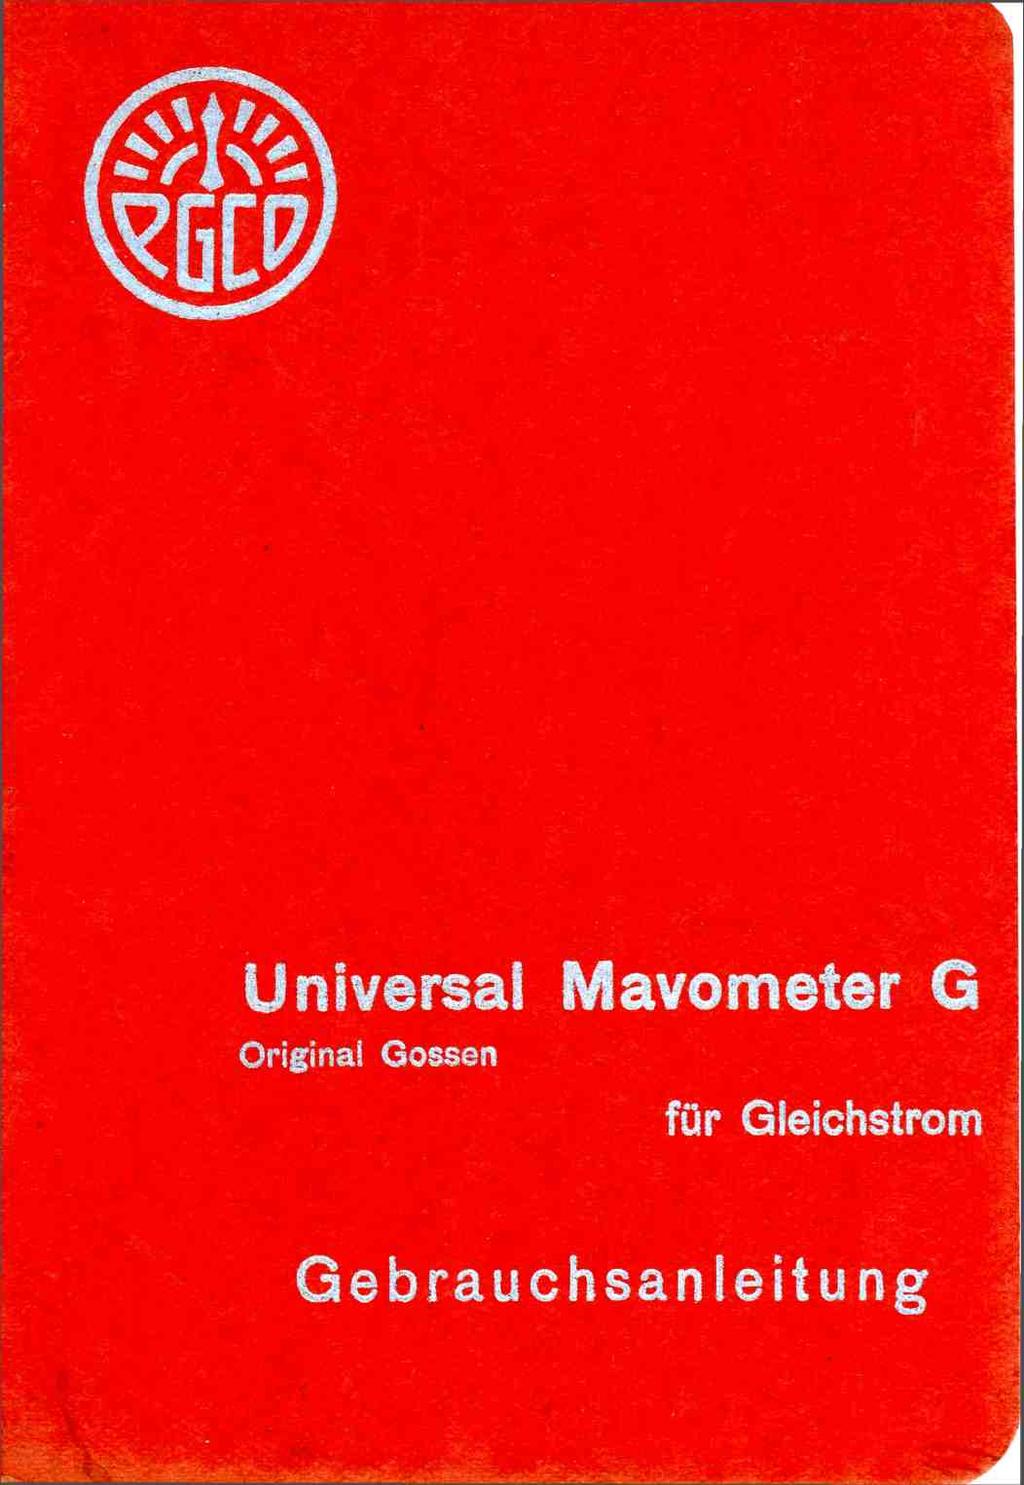 Universal Mavometer G Original